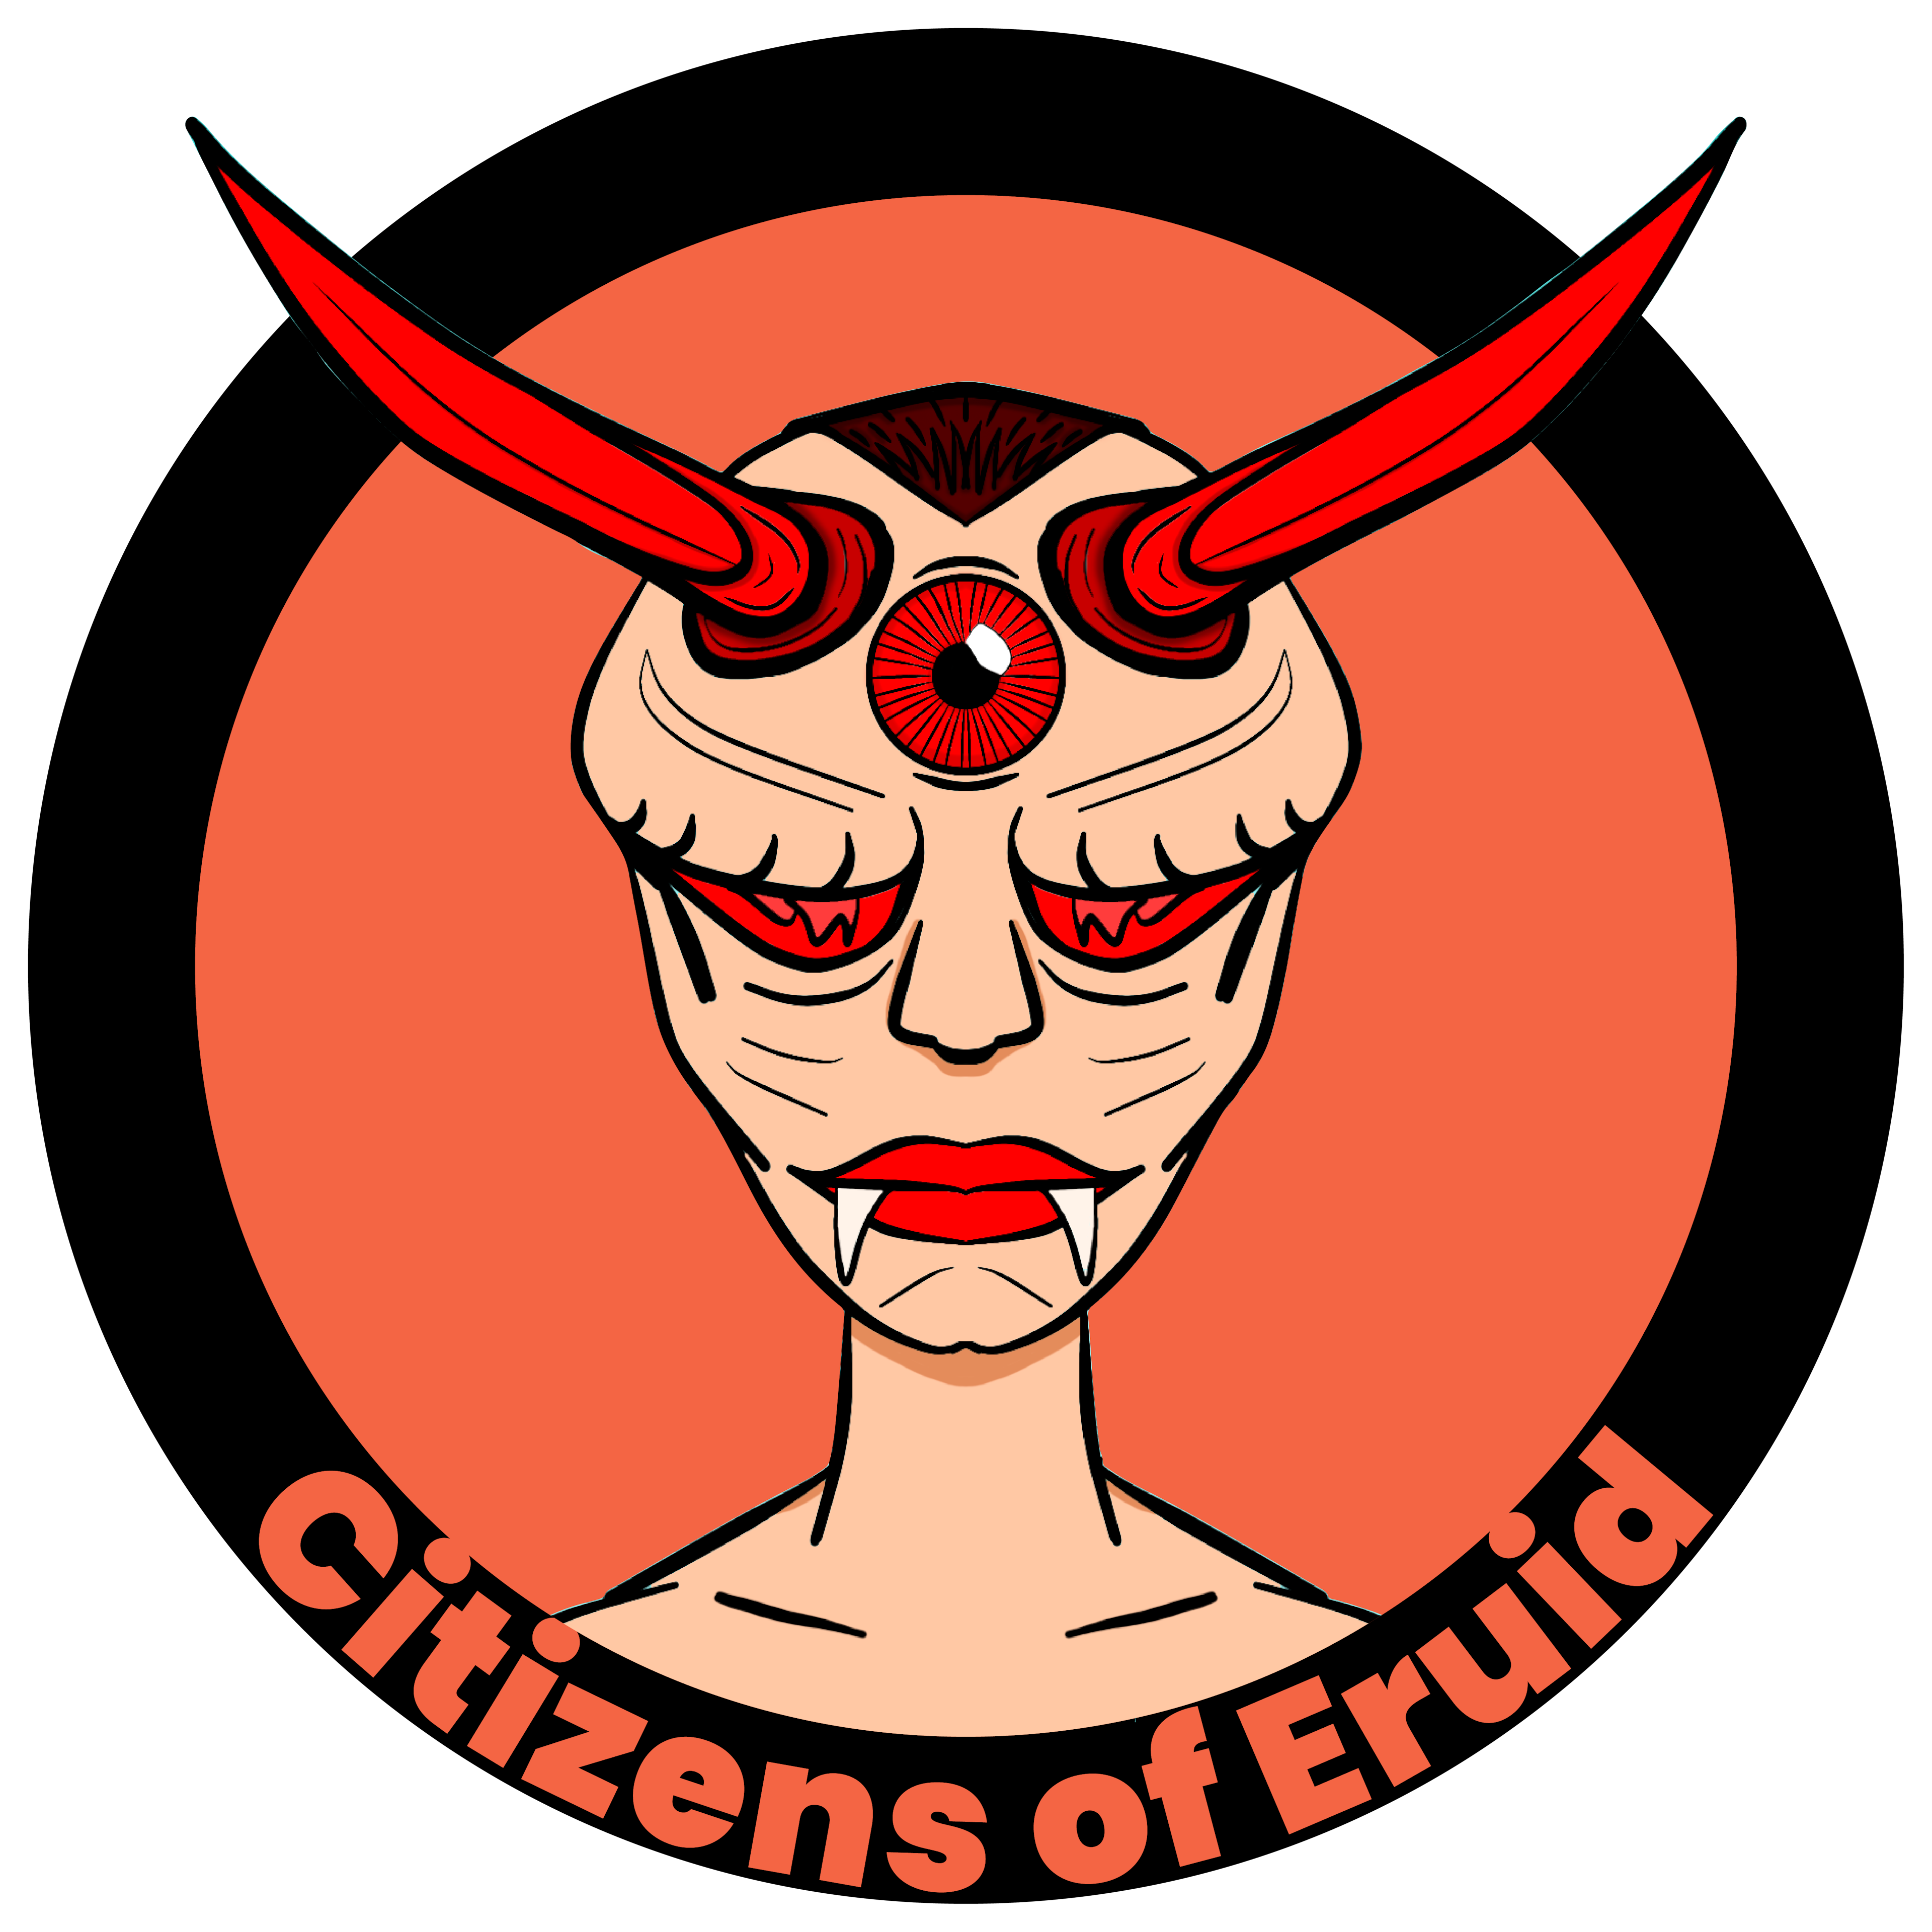 Citizens of Eruid